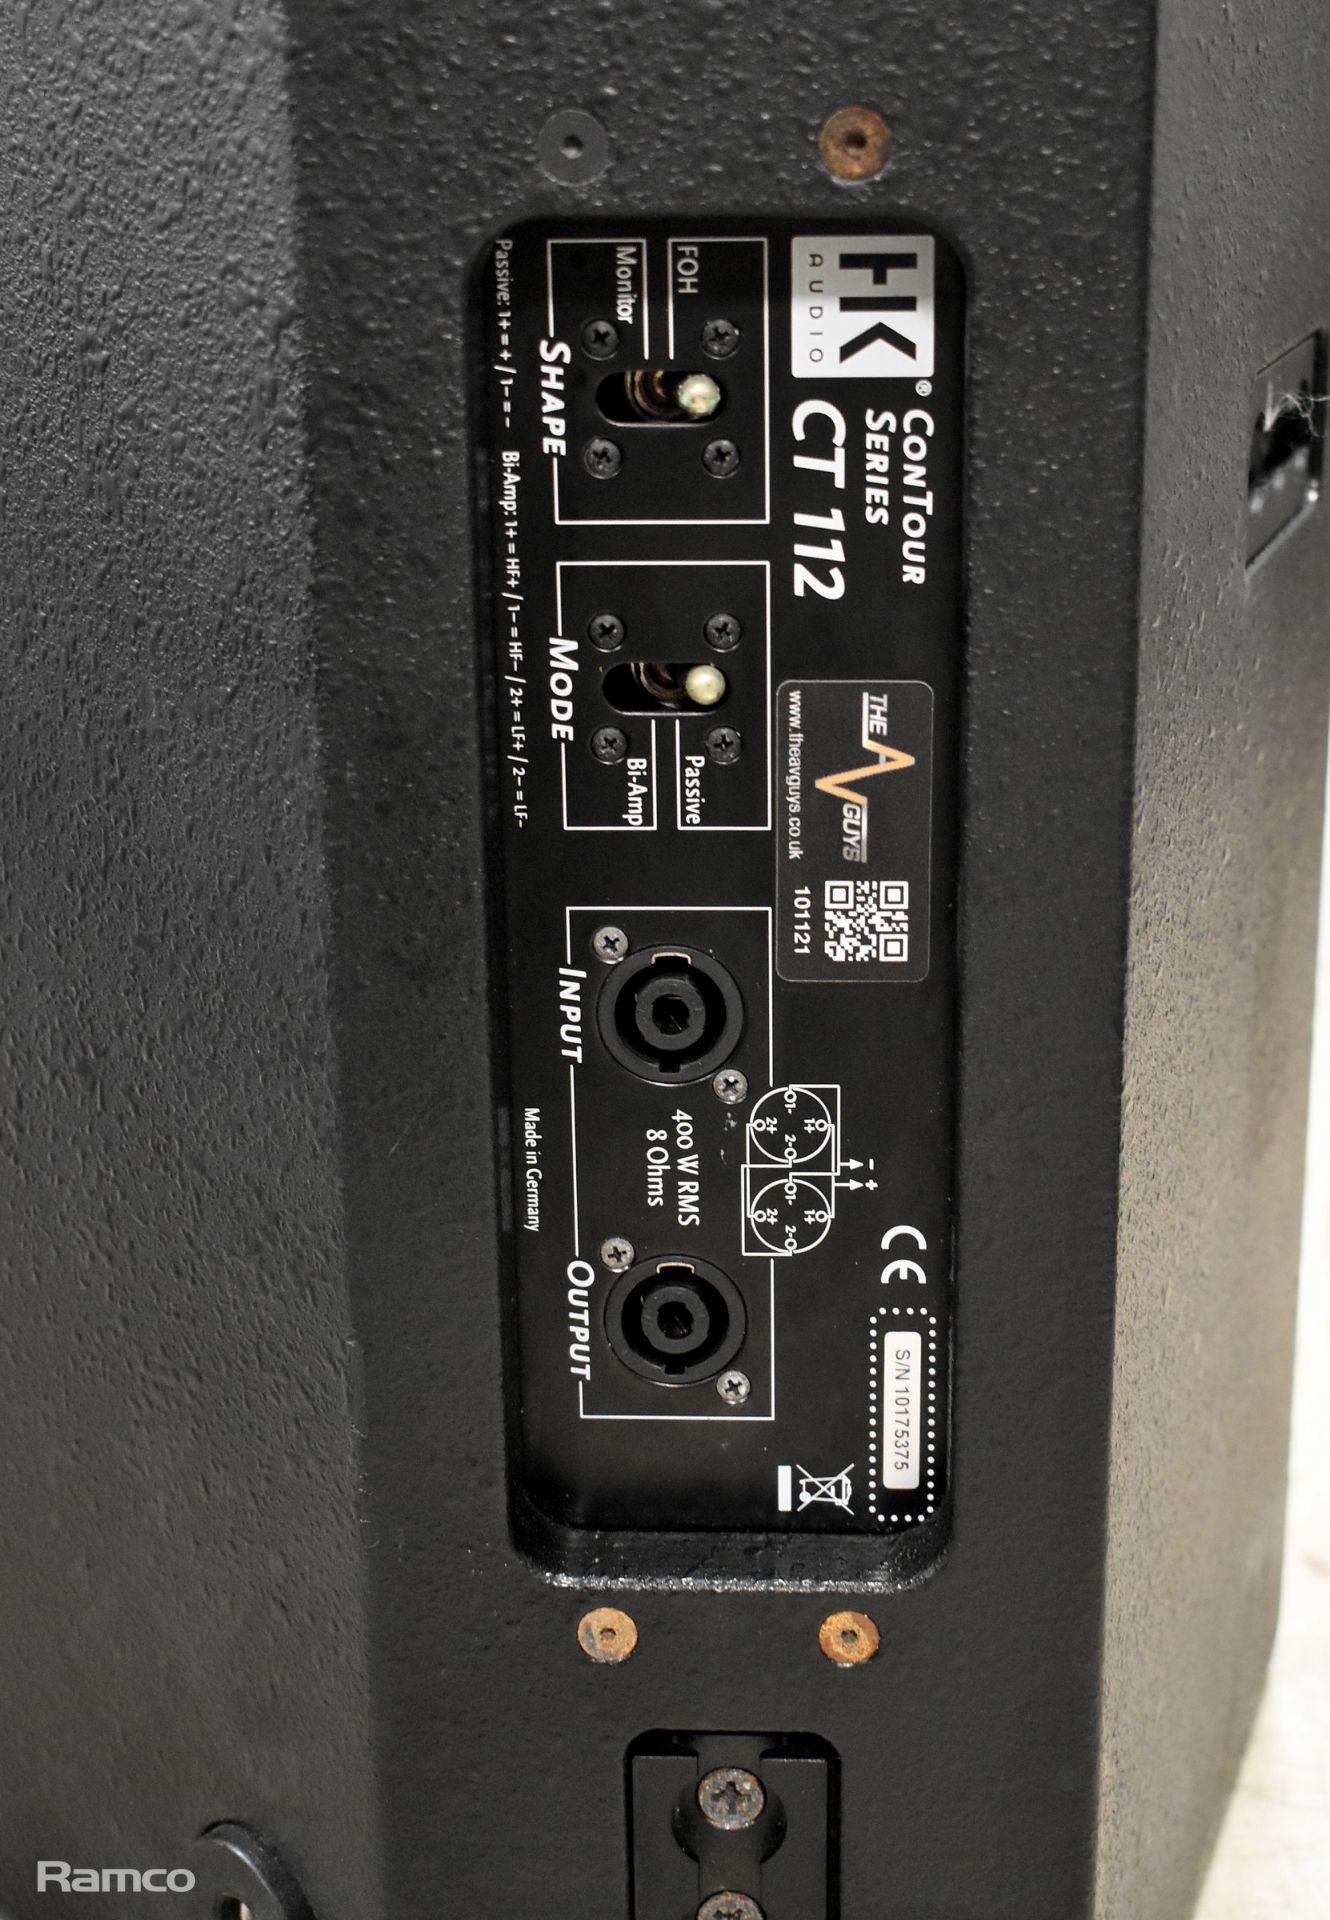 2x HK Contour Series CT 112 speakers in flight case - FOH & monitor speakers - Image 9 of 13